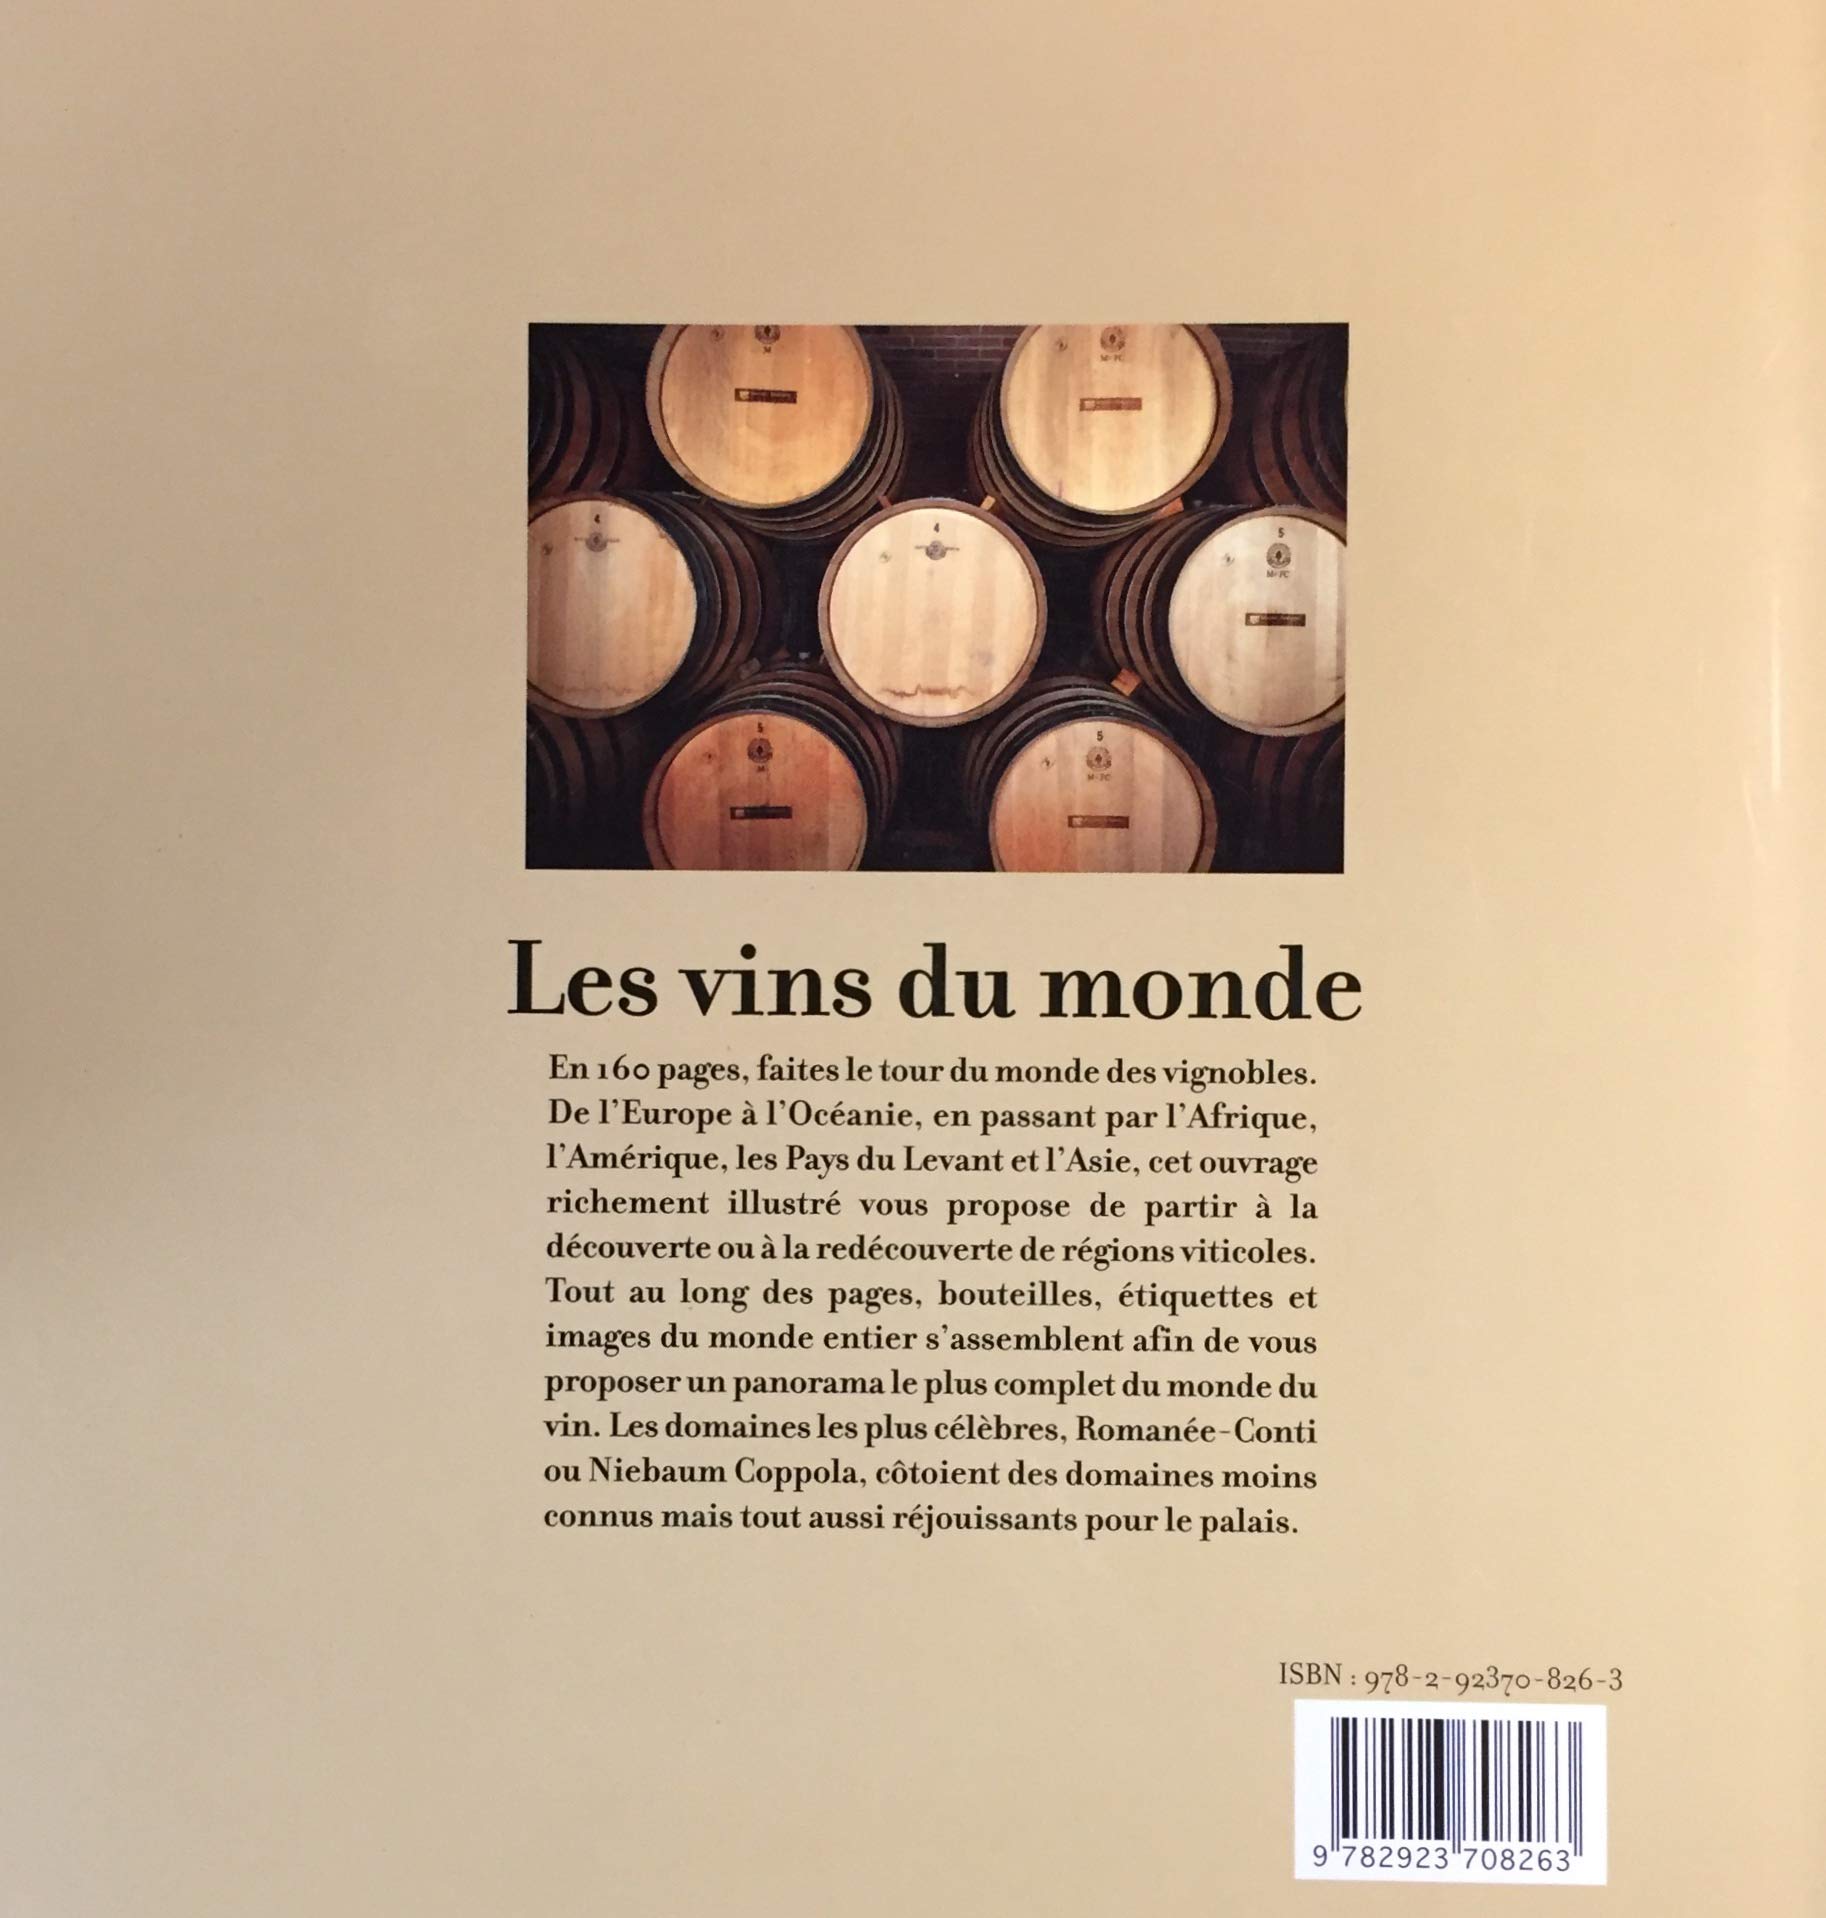 Les vins du monde (Sylvie Girard)